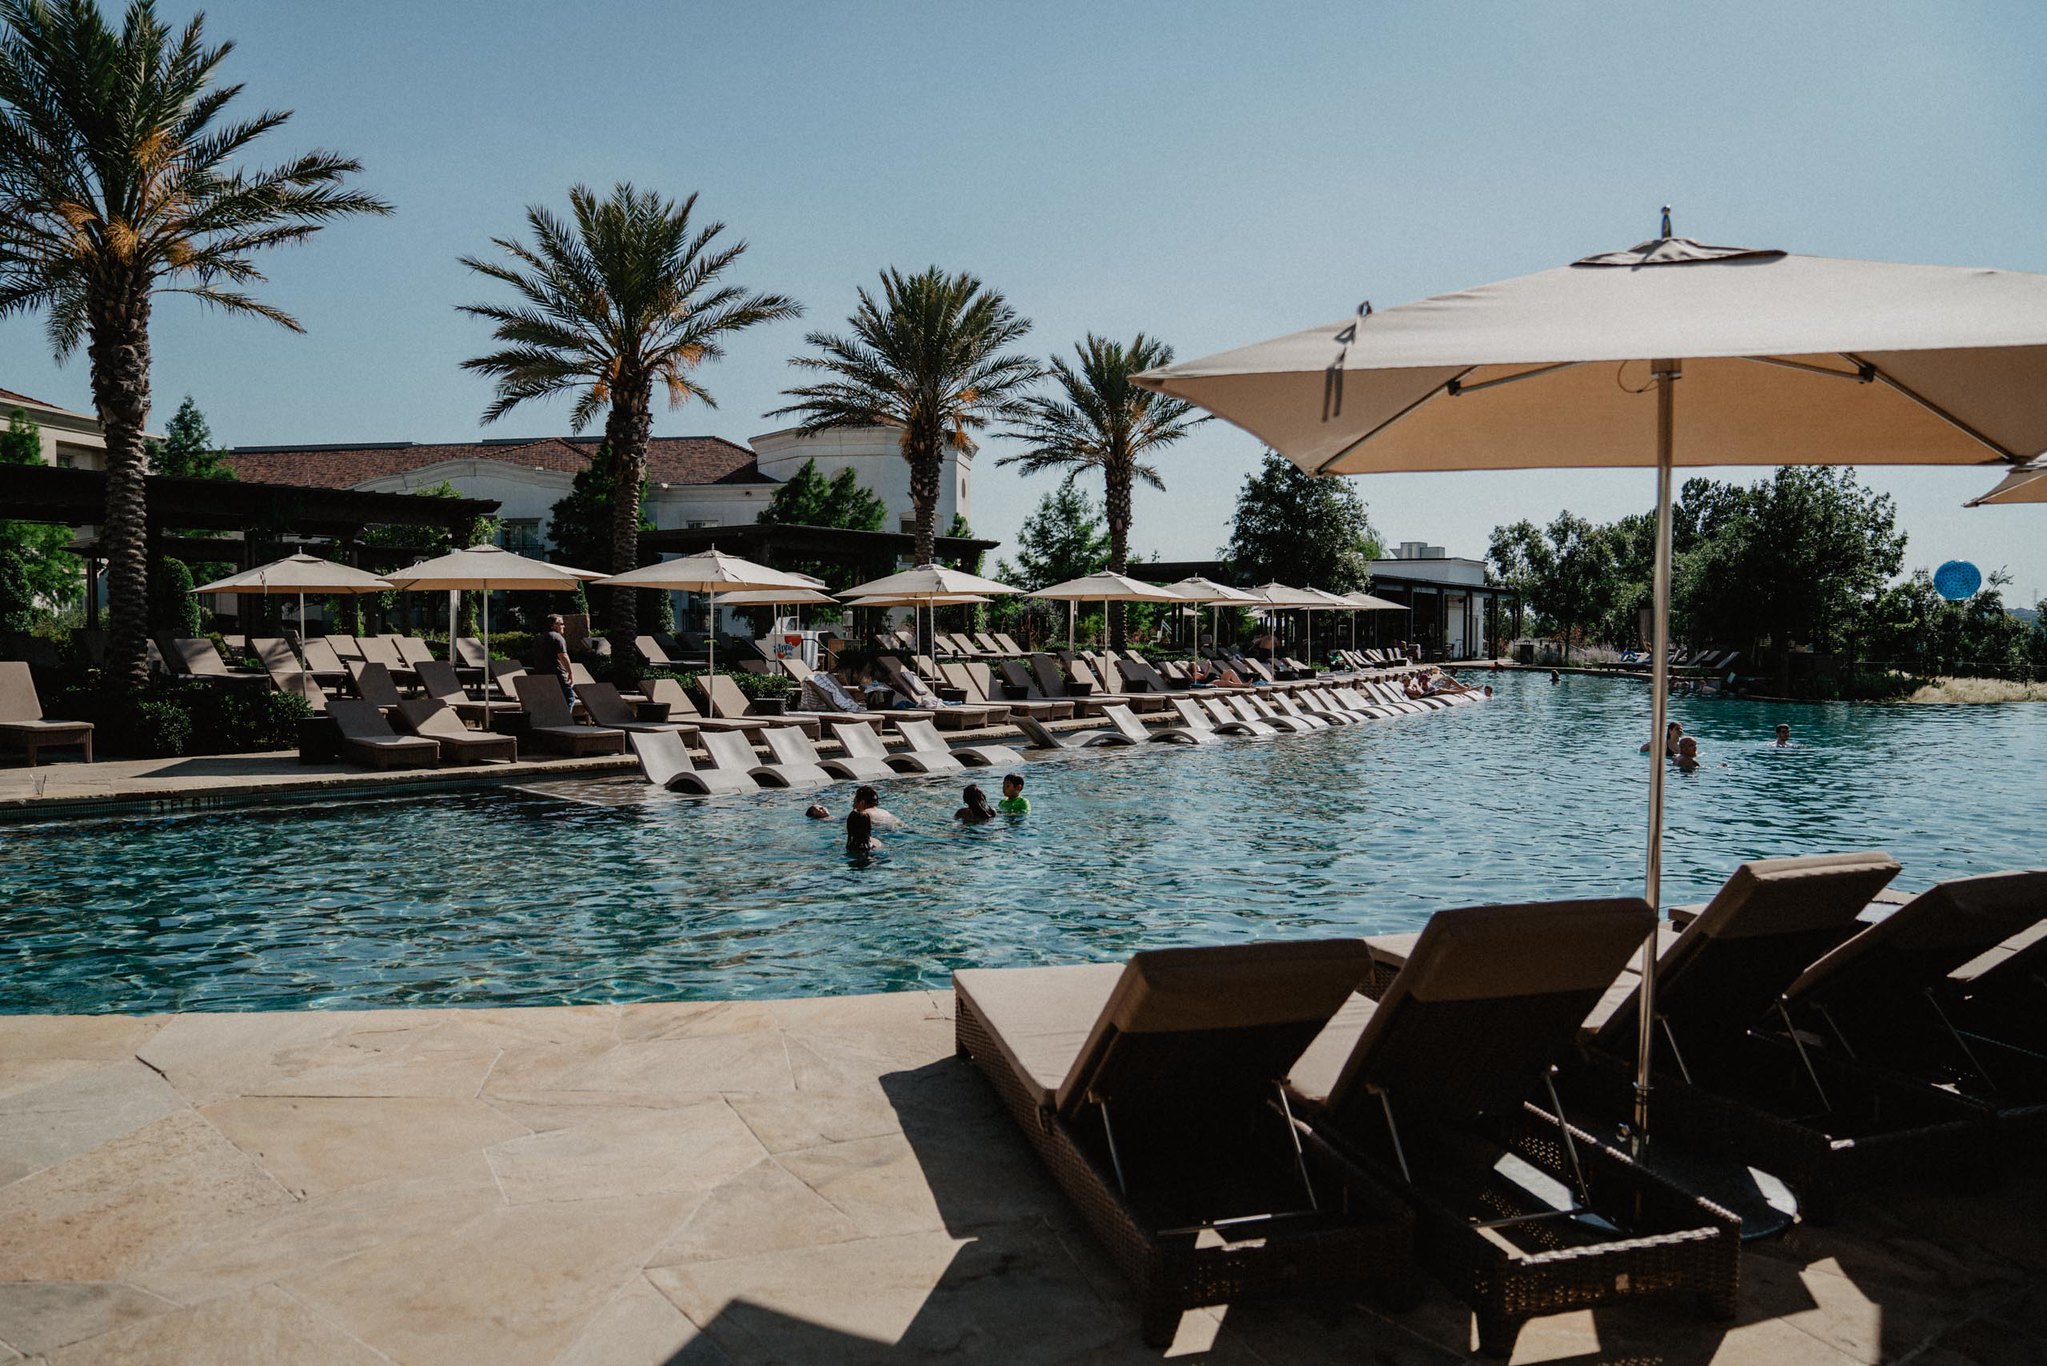 La Cantera Resort & Spa review: 6 reasons to stay - LBL Travel